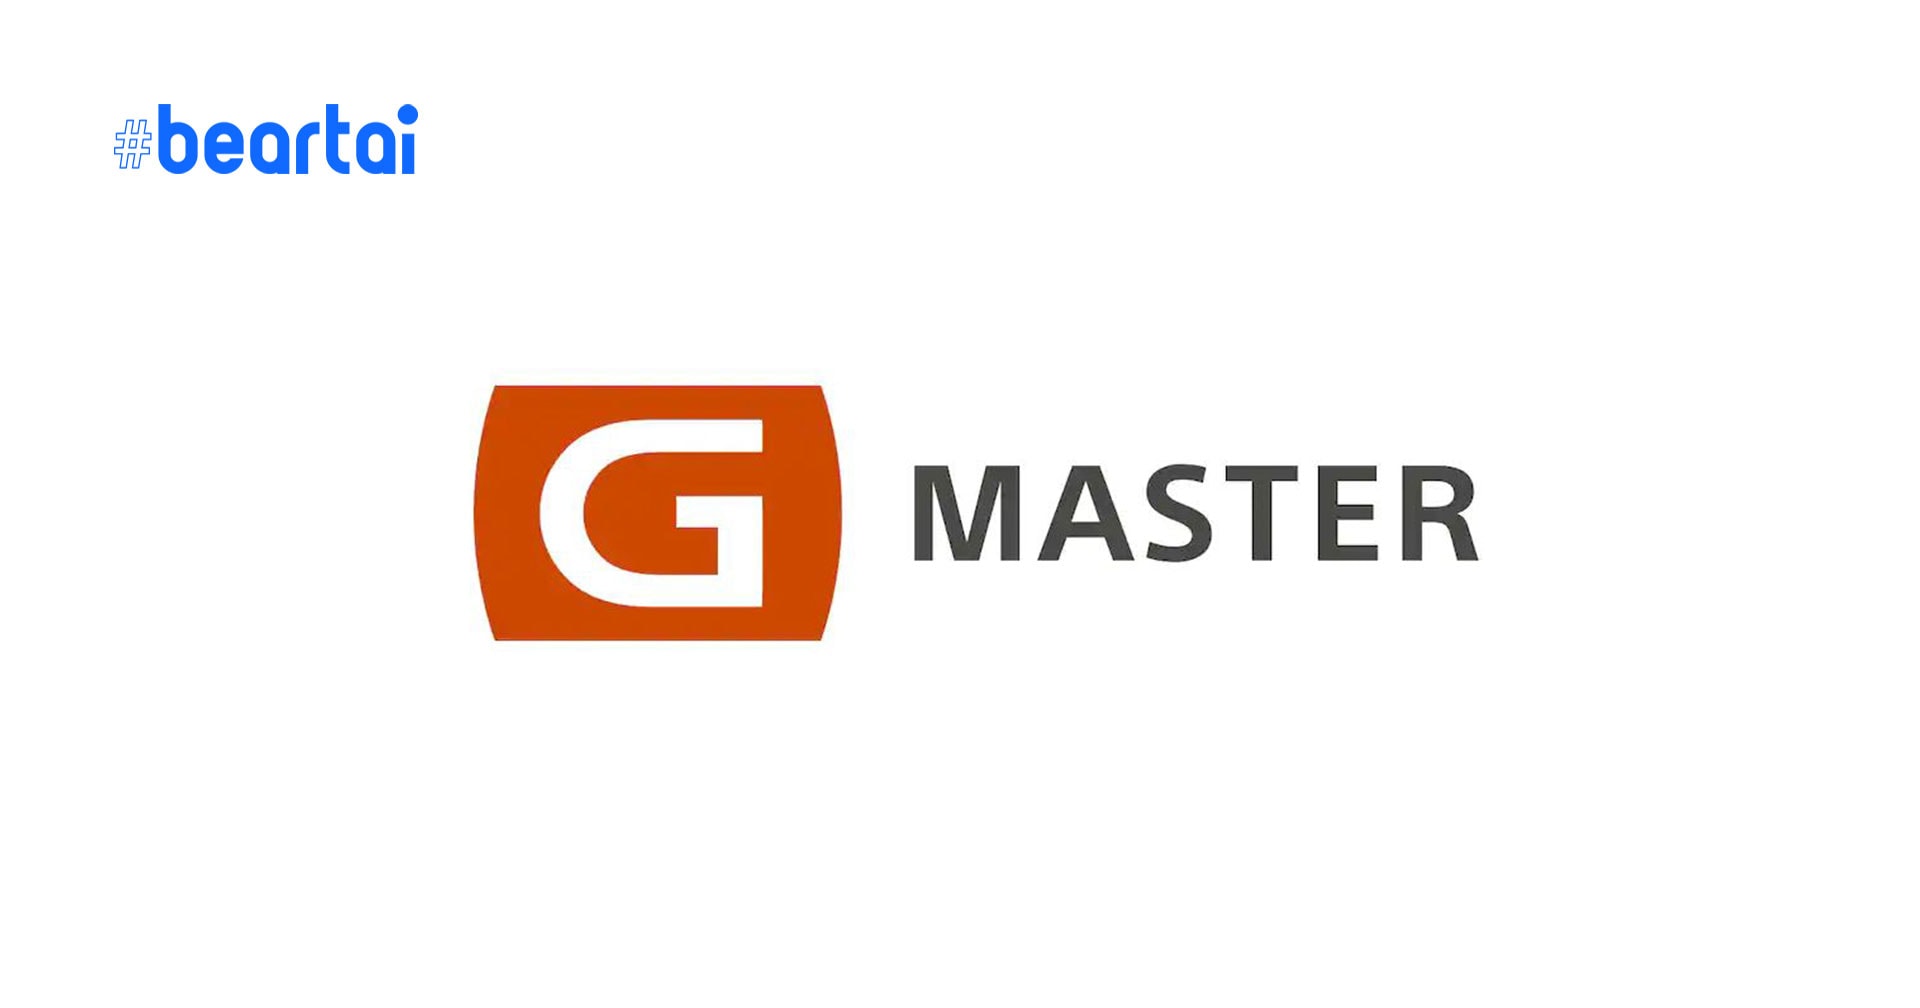 G master